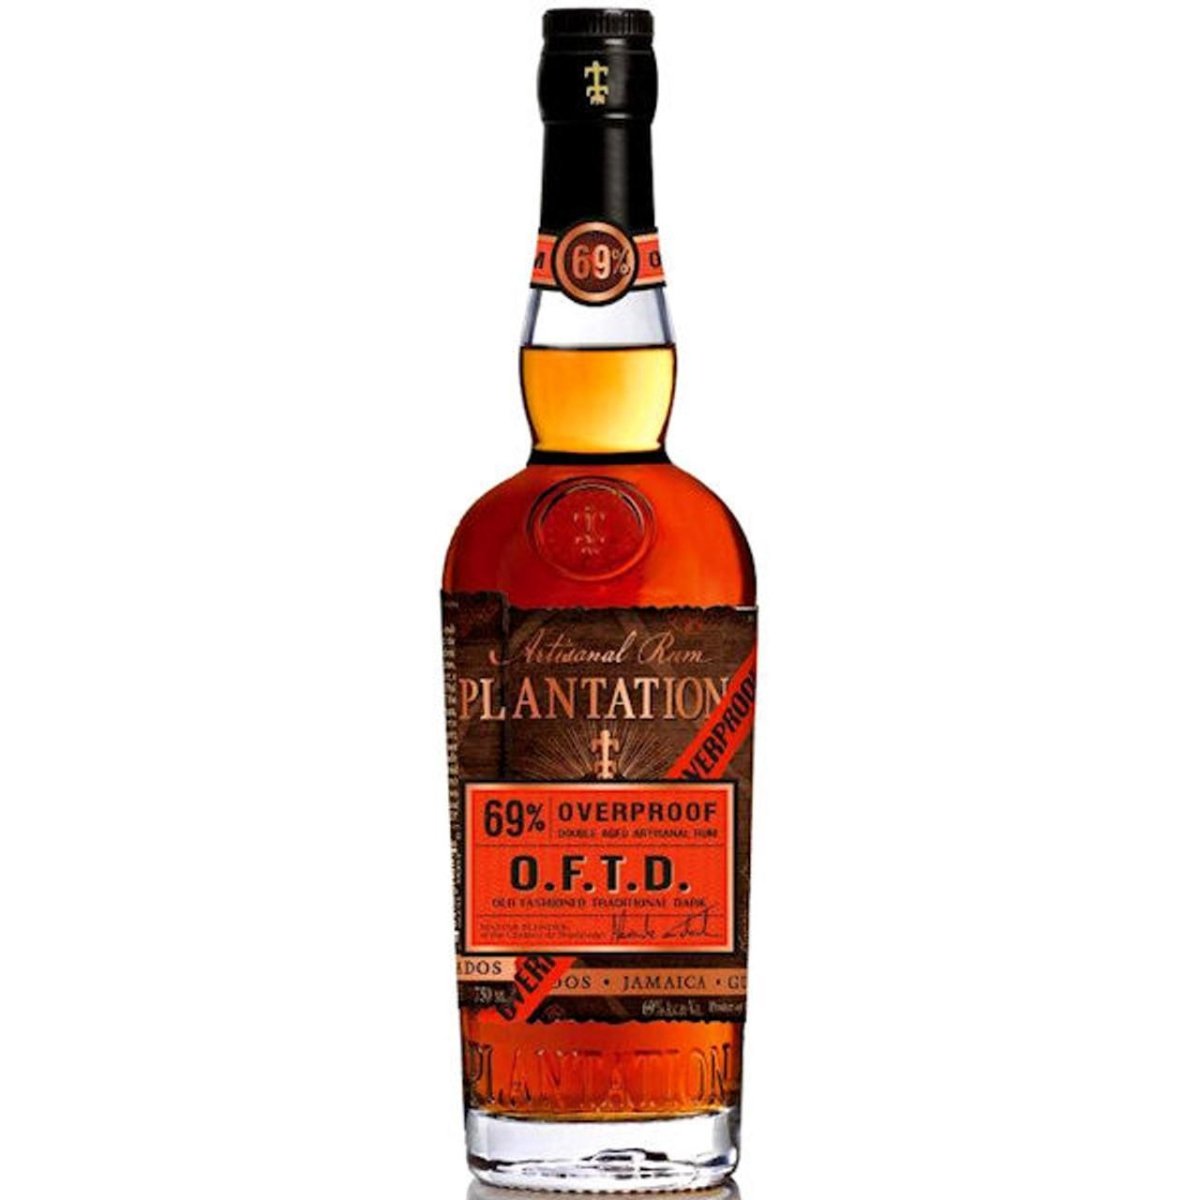 Plantation Artisanal Rum - 'O.F.T.D.' Overproof Artisanal Rum (1L) - The Epicurean Trader